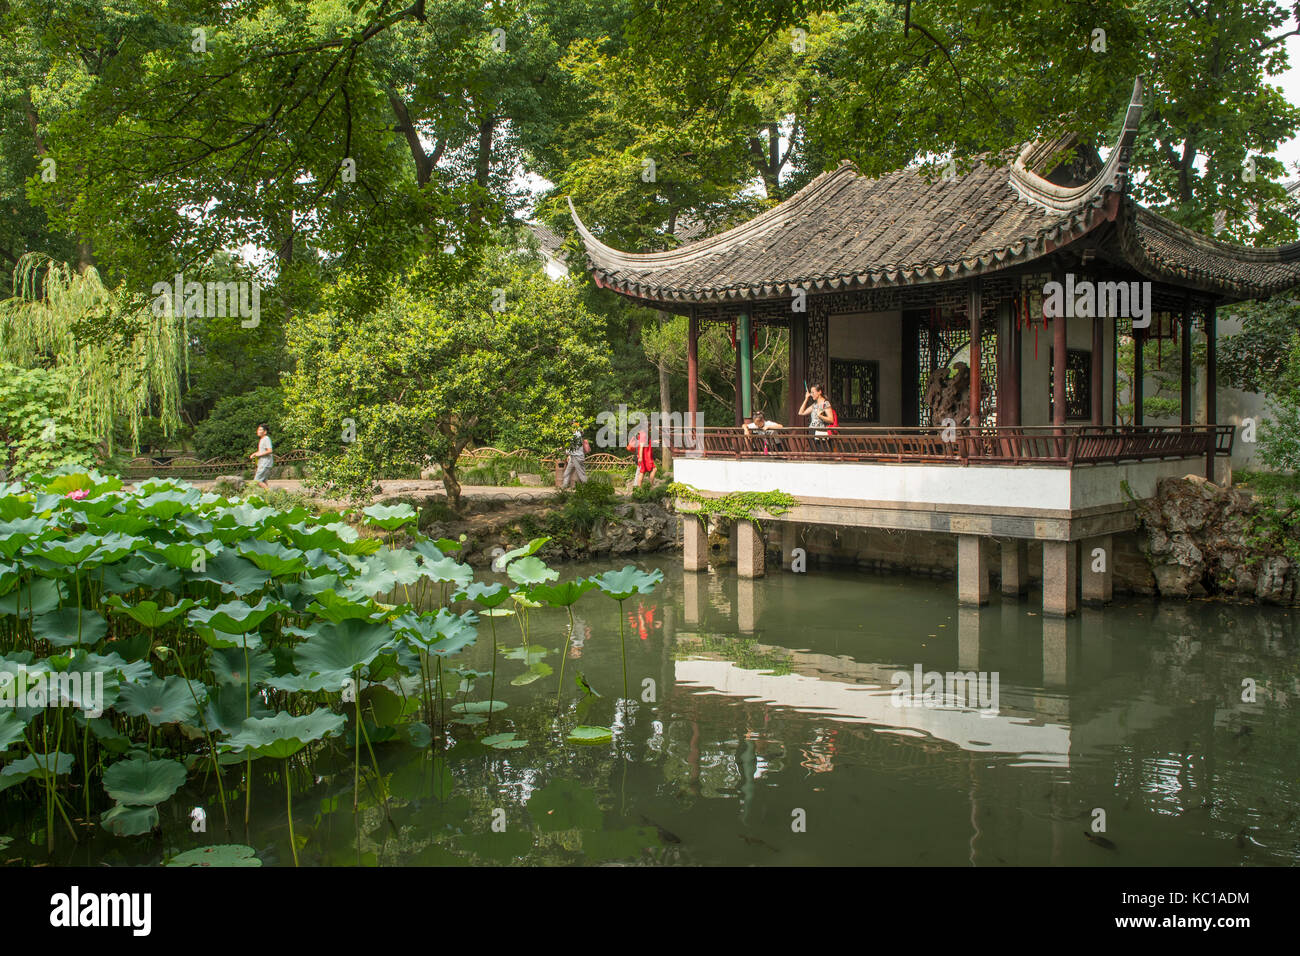 Lontano cercando pavilion, umile administrator's garden, Suzhou, Cina Foto Stock